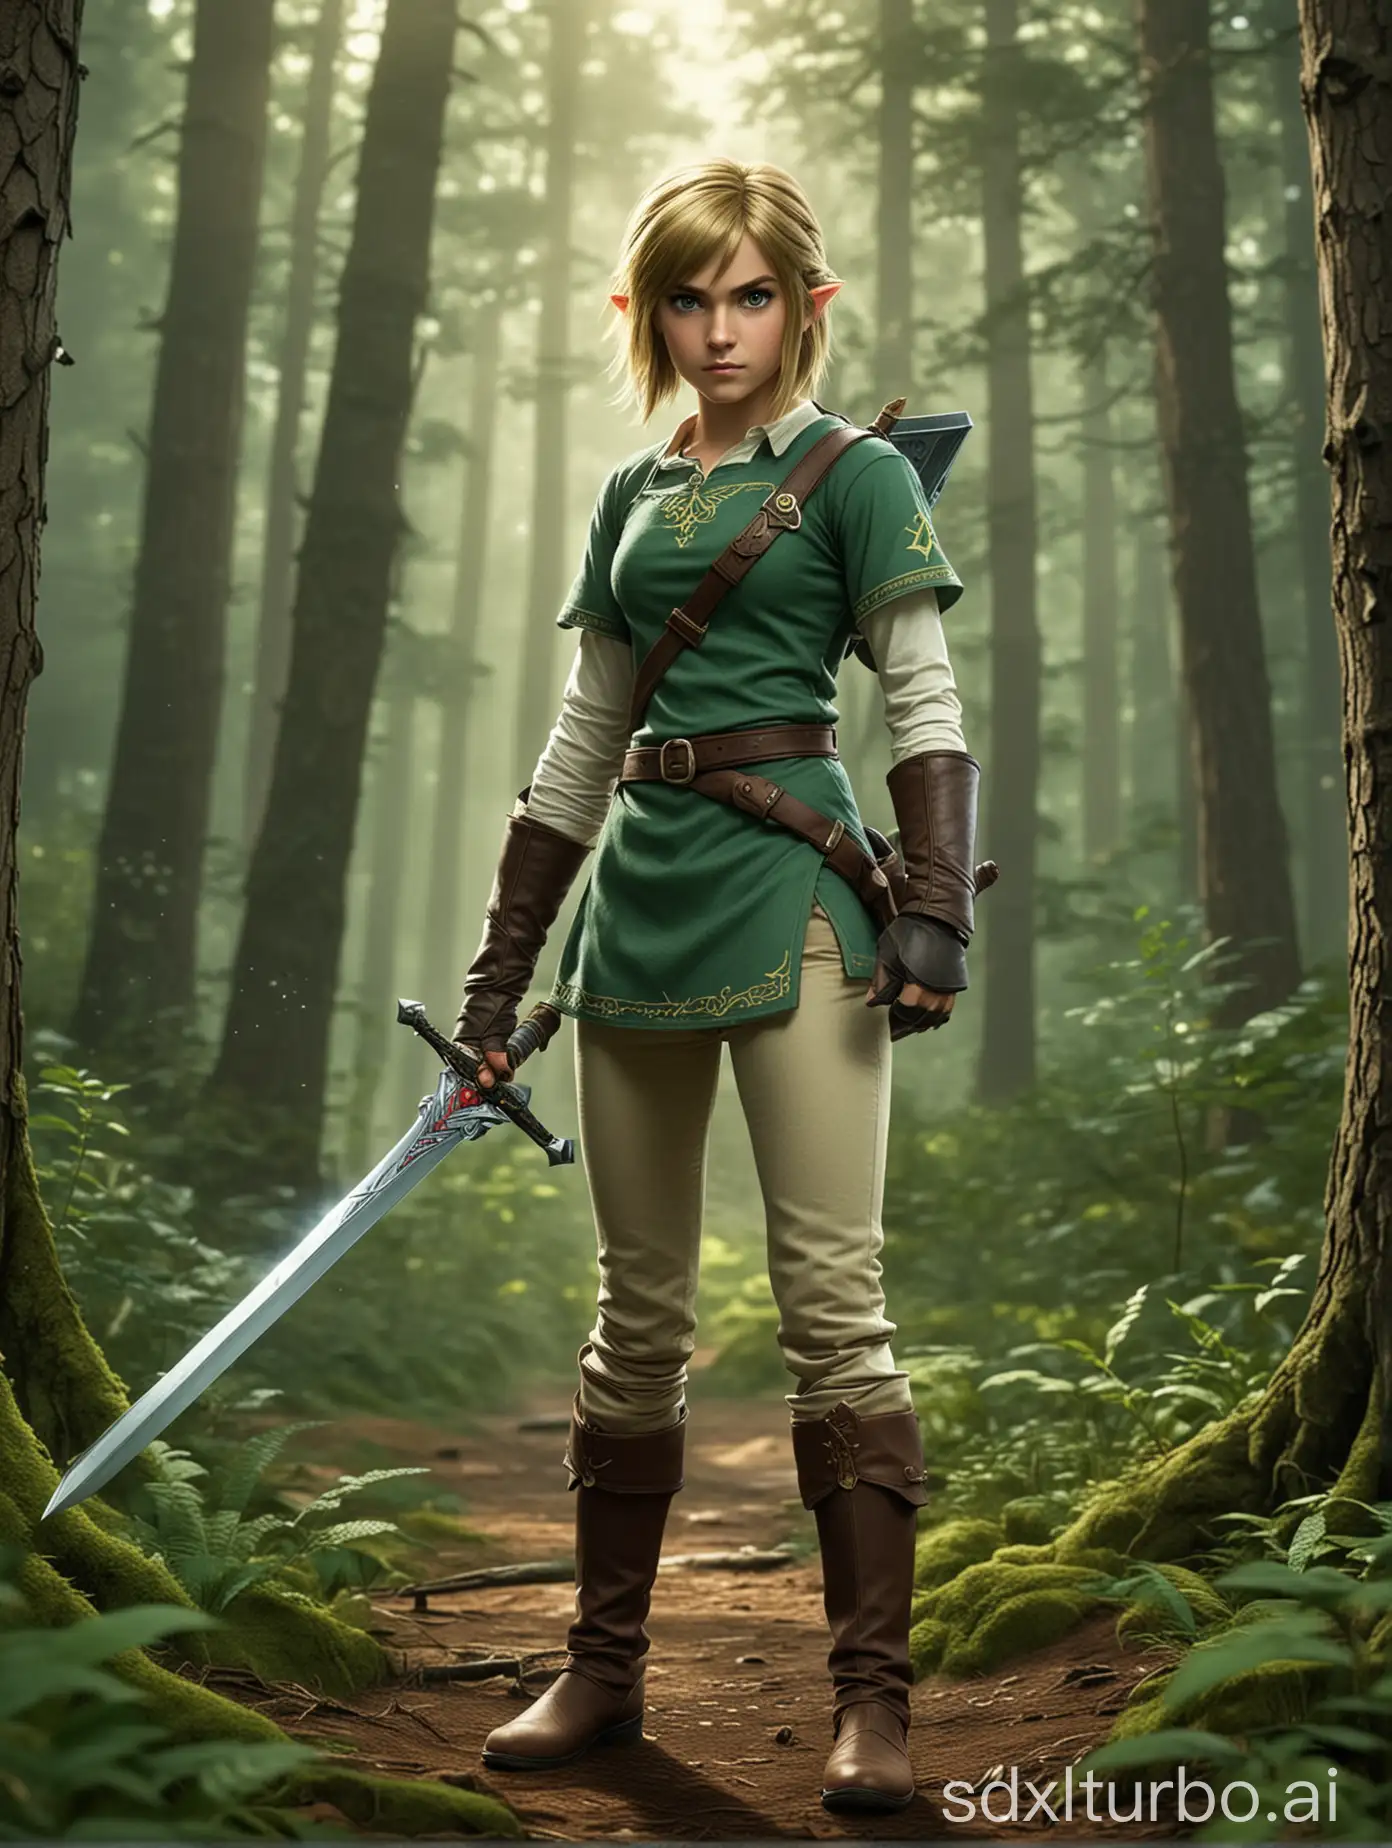 Teen-Girl-Link-with-Sword-in-Enchanted-Forest-Legend-of-Zelda-Fan-Art